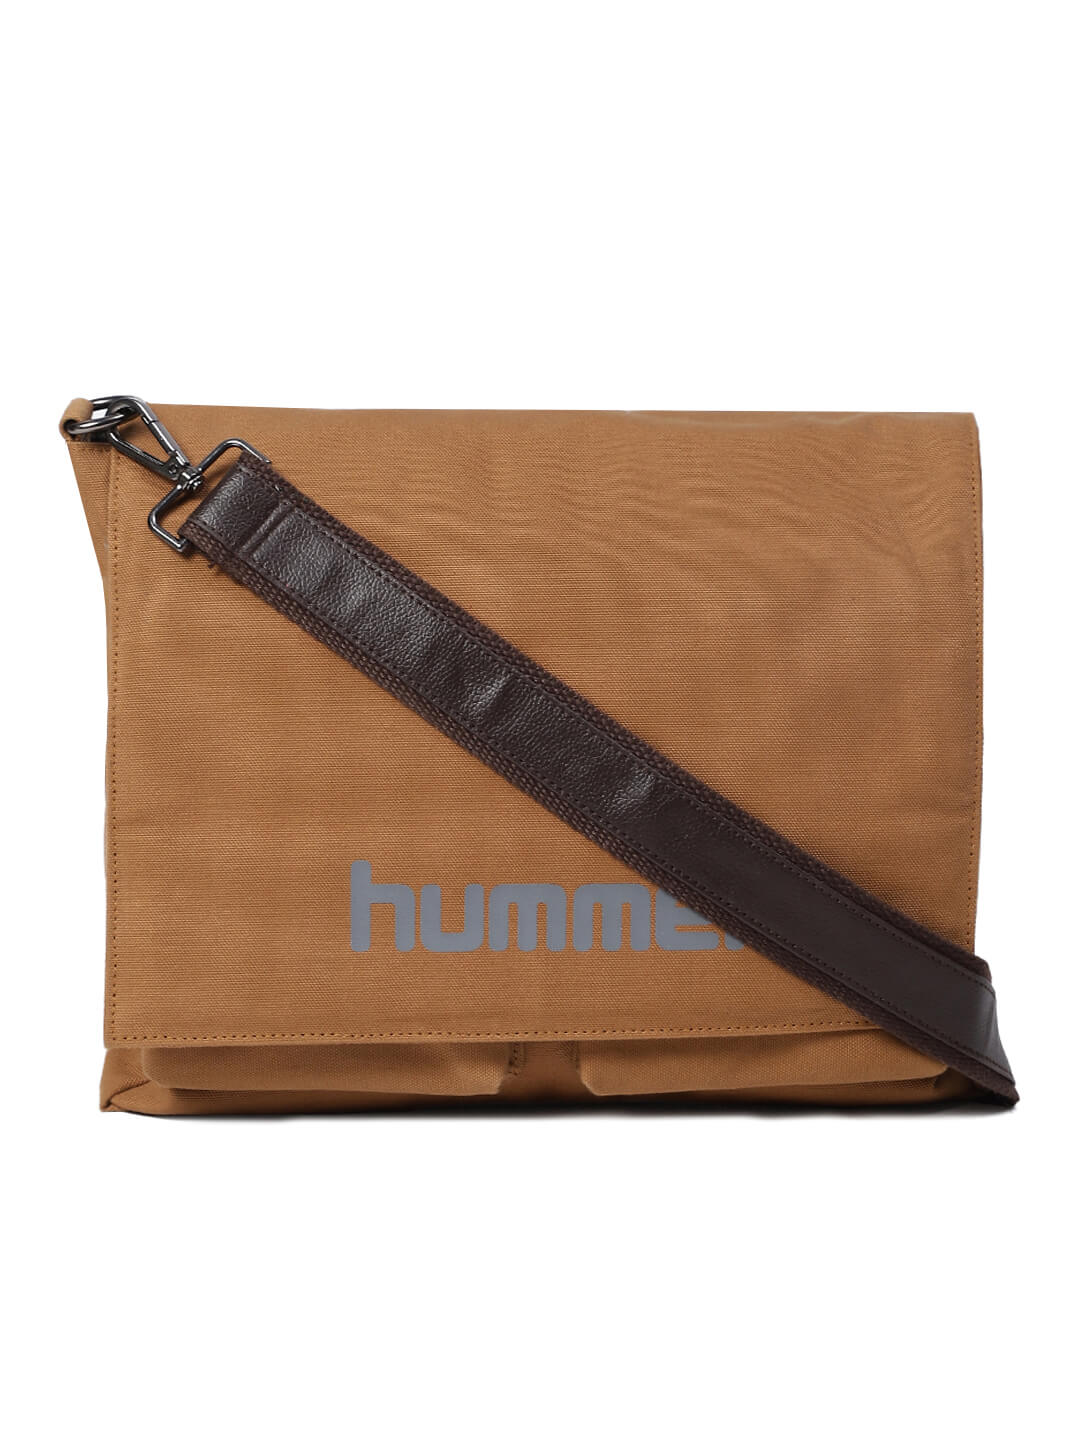 Bulchee Unisex Brown Sling Bag - TMHBLD5115.2-18